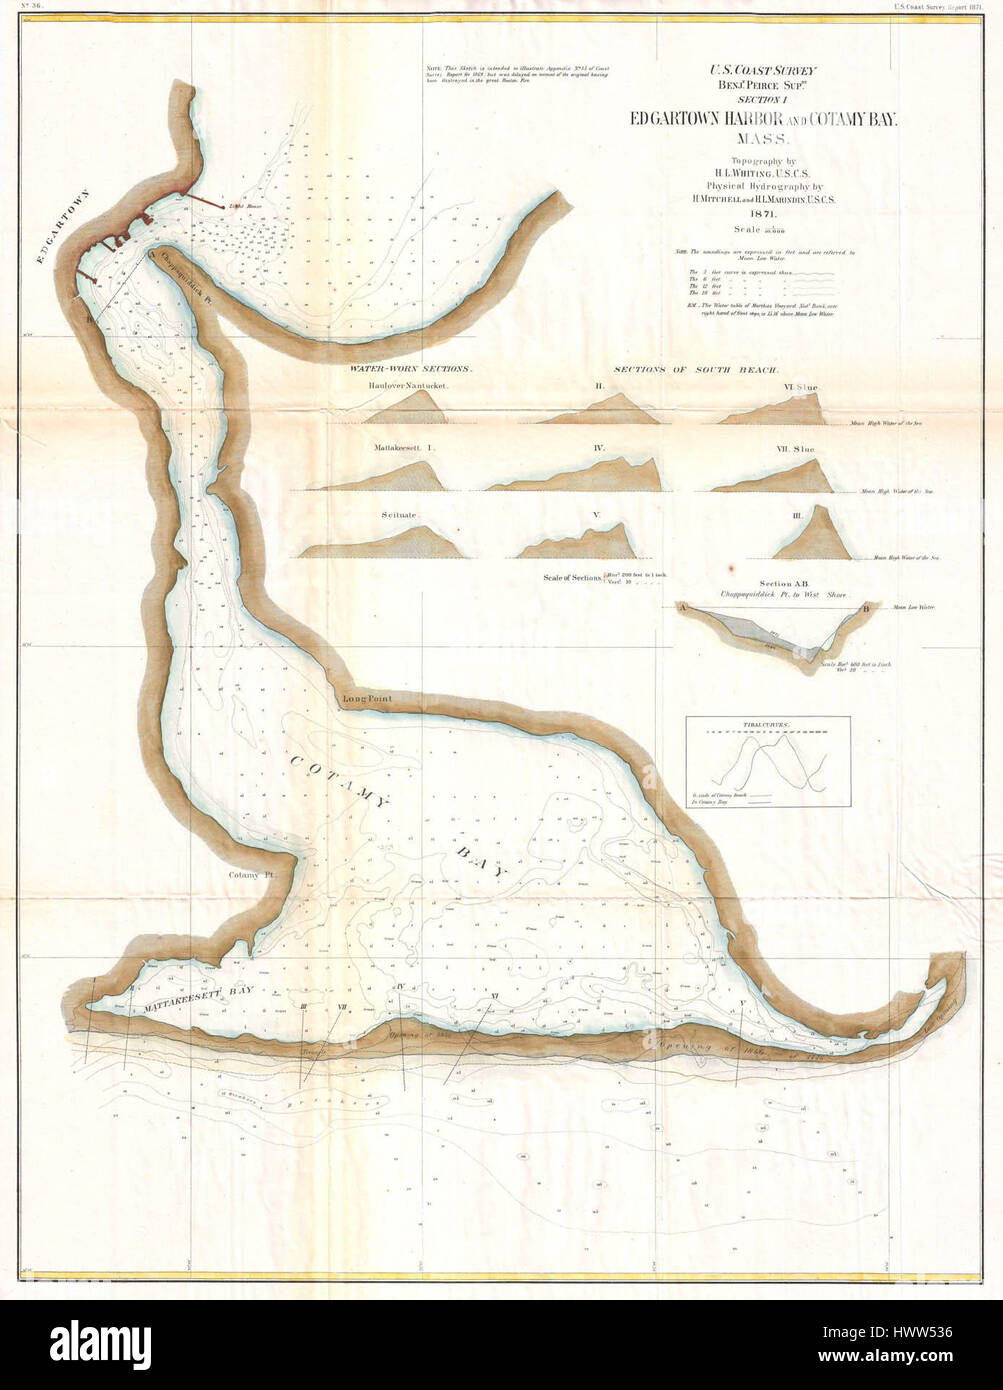 1871 U.S. Coast Survey Map or Chart of Edgartown Harbor, Martha's Vineyard, Massachusetts   Geographicus   Edgartown uscs 1871 Stock Photo